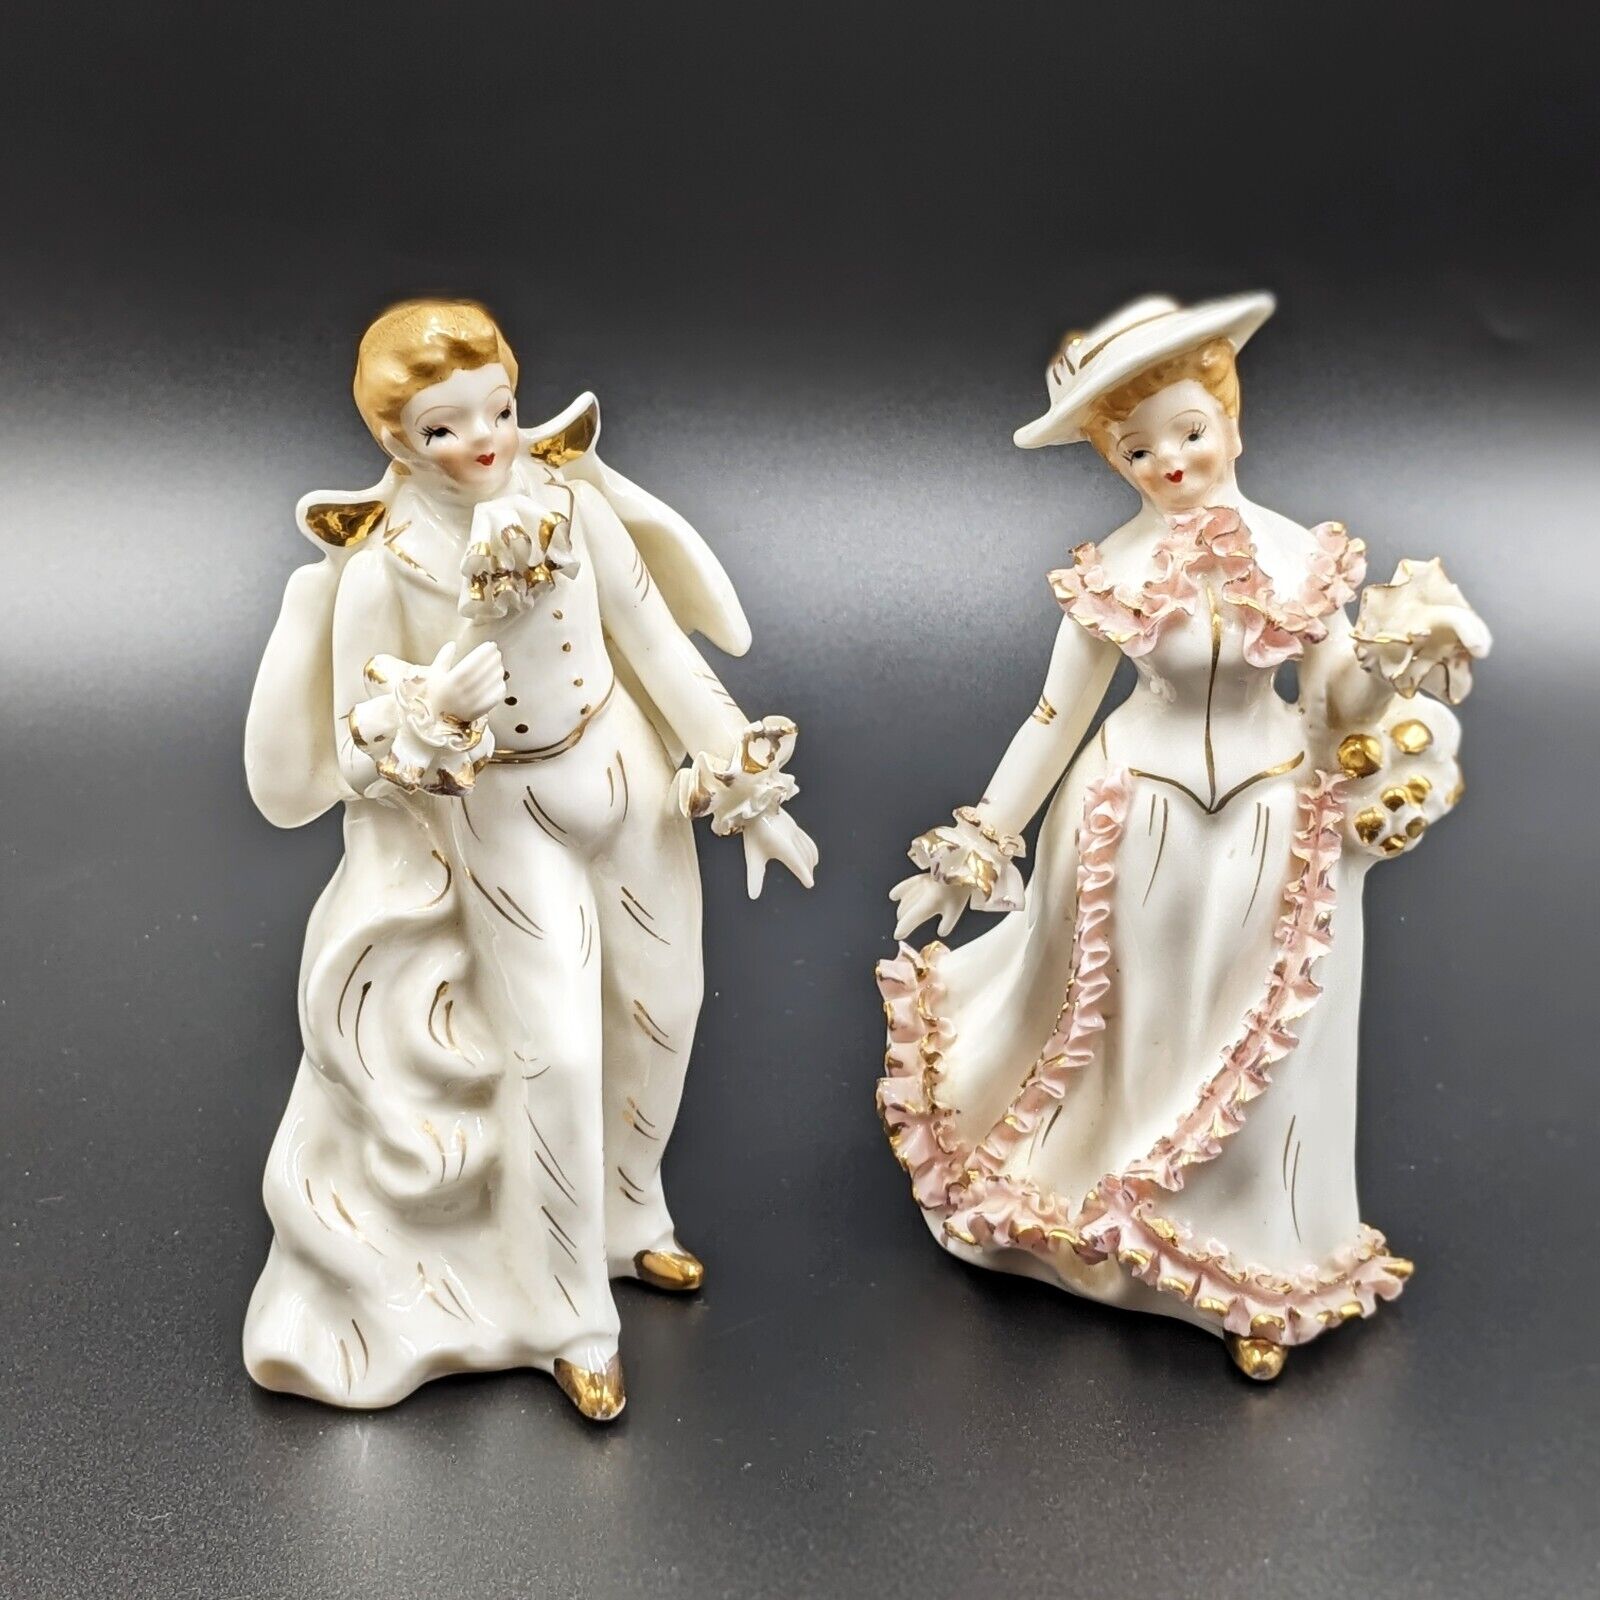 VTG Artmark Japan Porcelain Figurines Victorian Era Couple Ruffles Cape